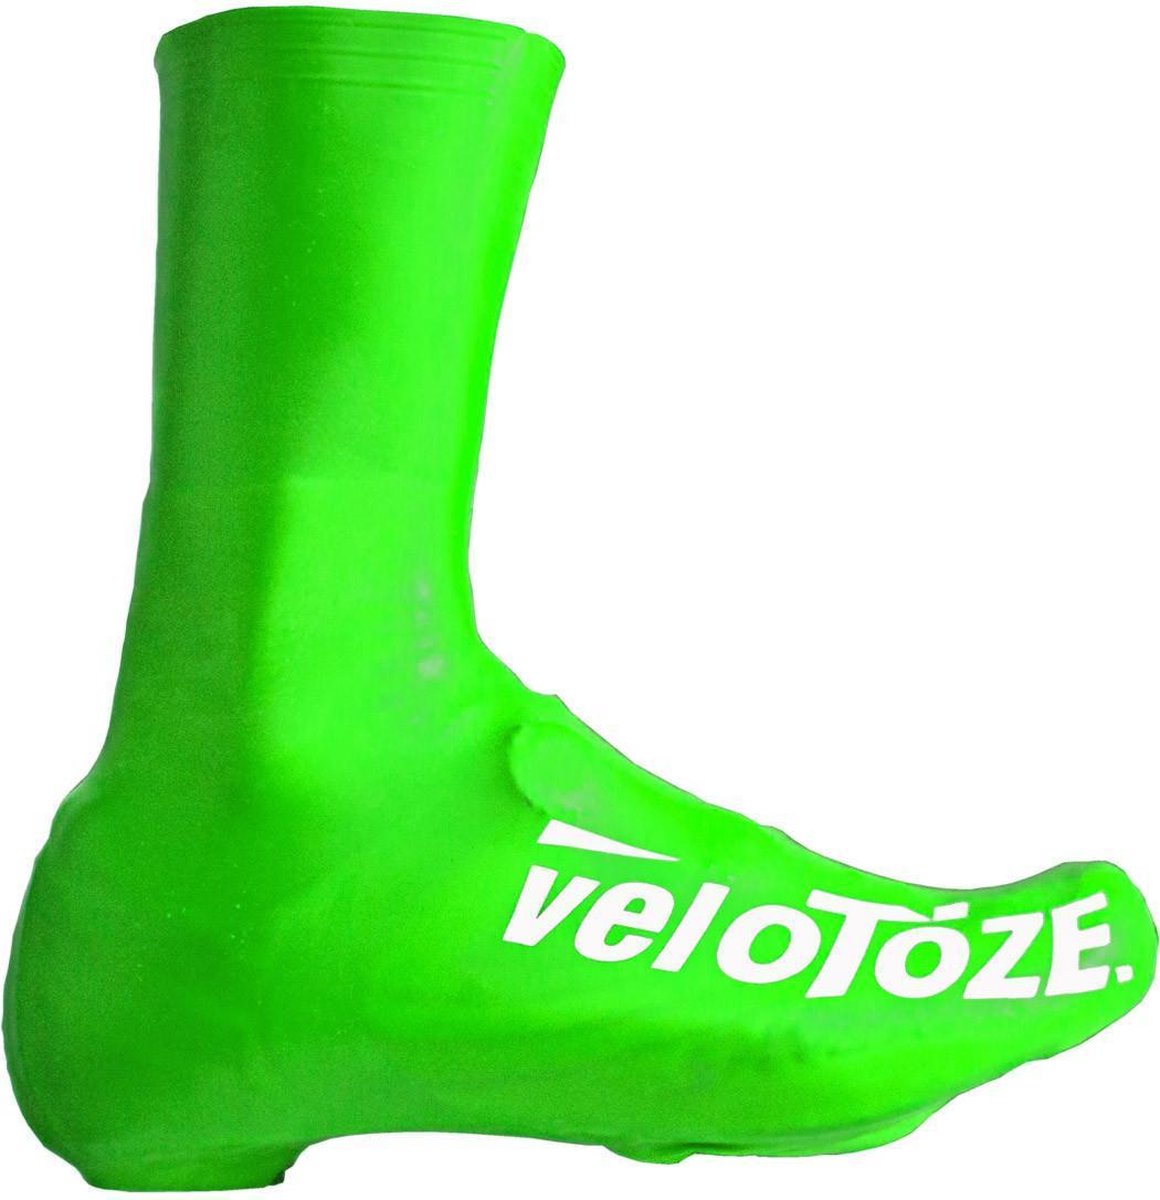 VeloToze latex overschoenen Fluo Green Size 40.5-42.5